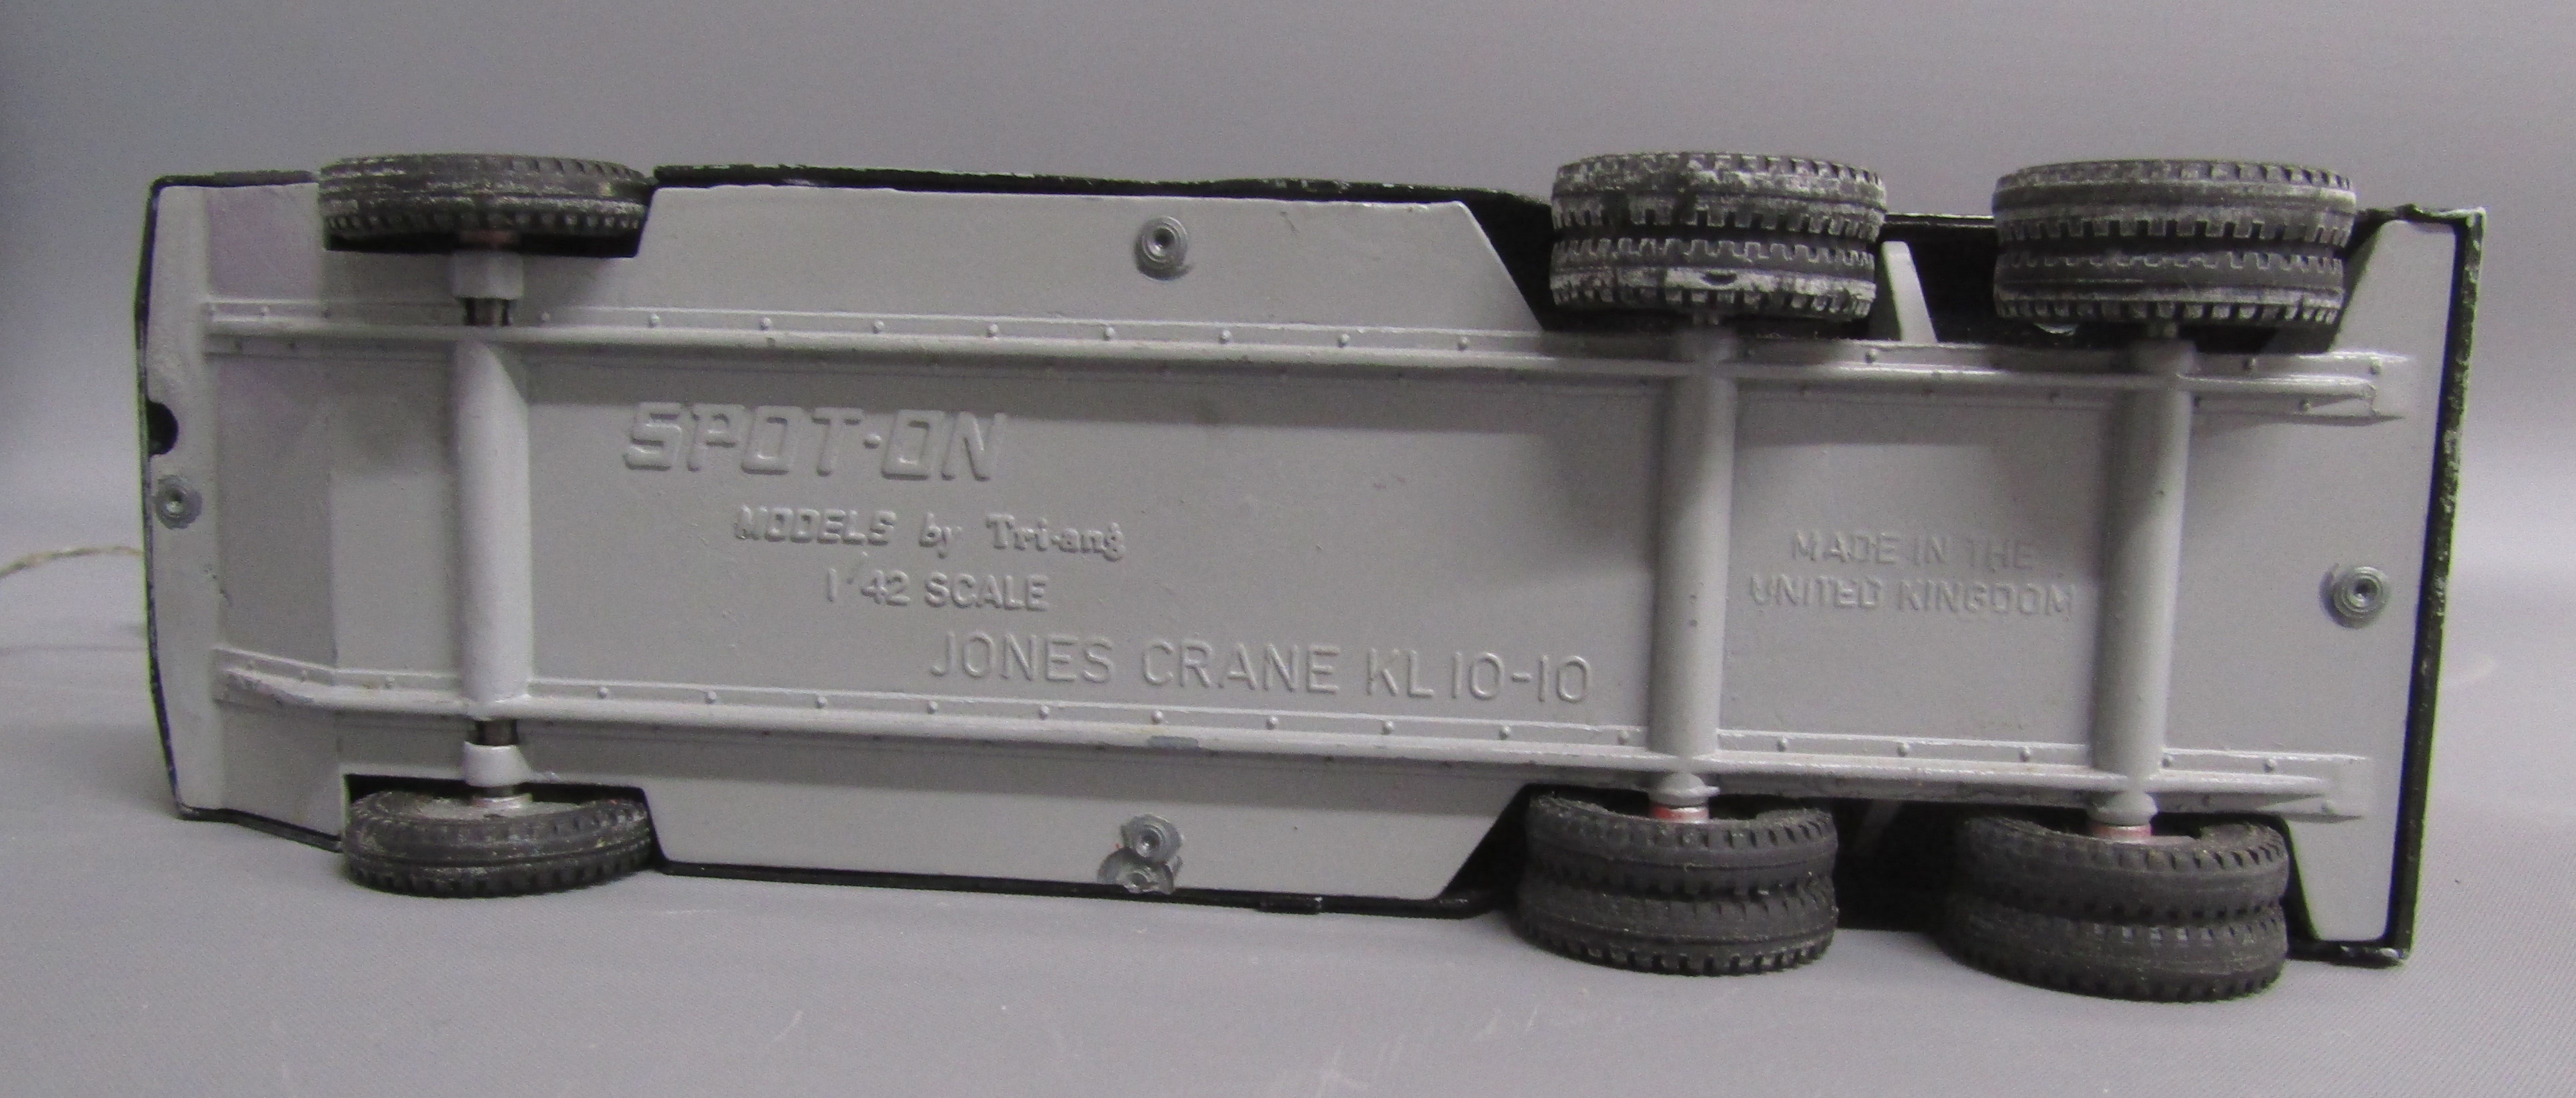 Boxed Tri-ang Spot-on models Jones Crane KL10-10 No 117 - Image 7 of 10